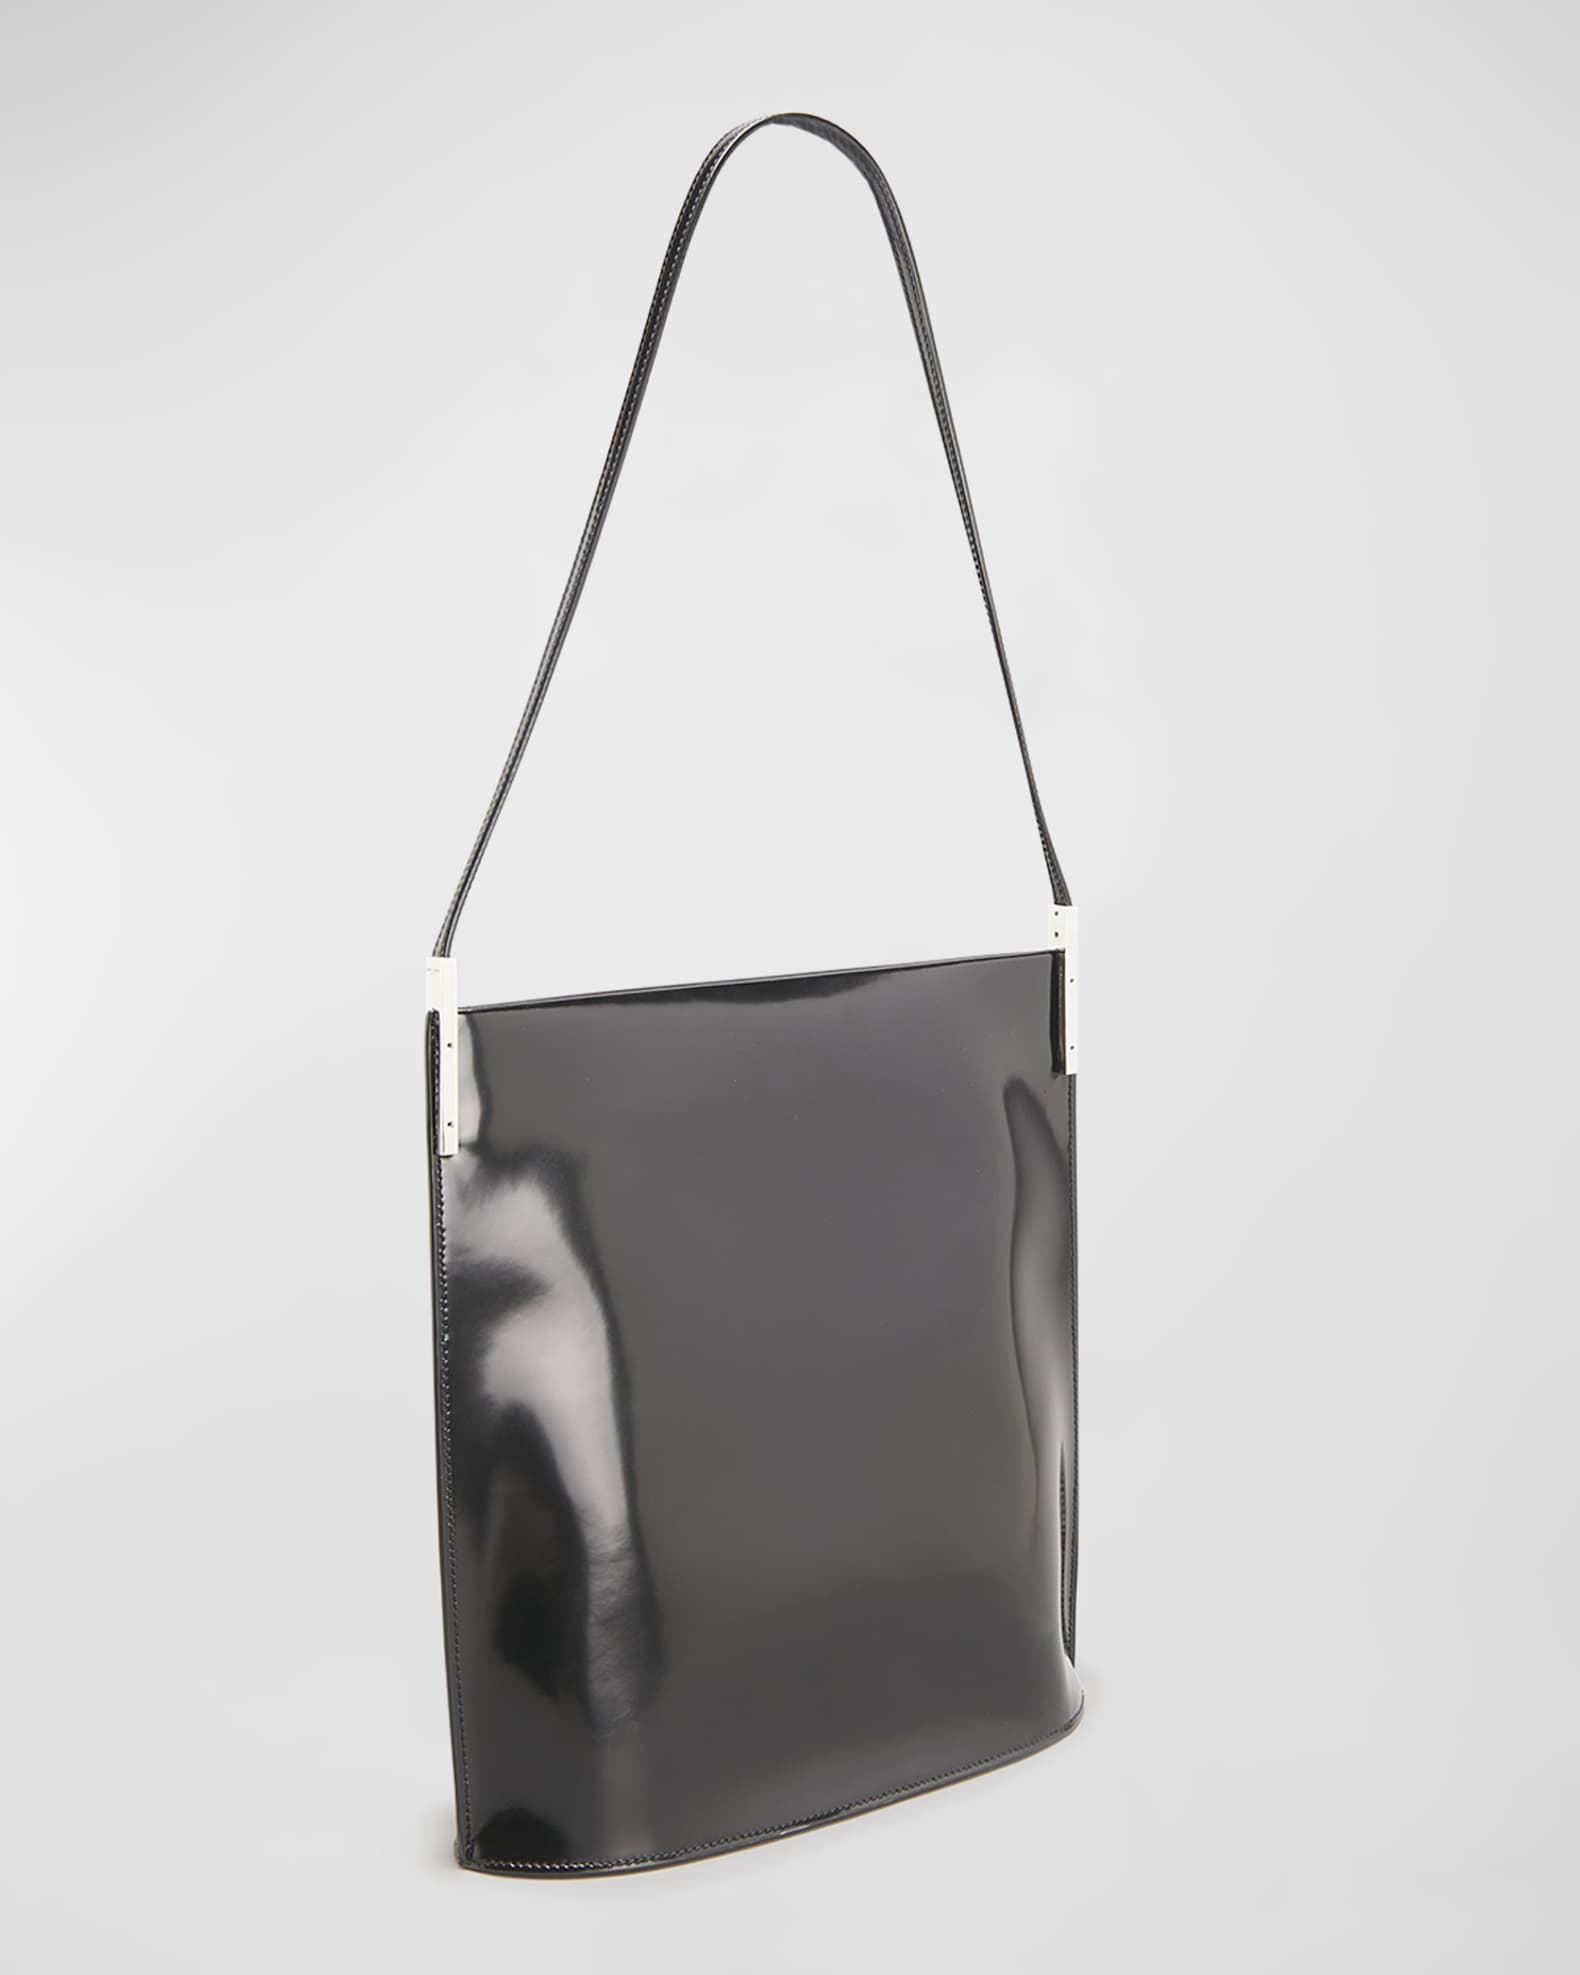 Saint Laurent Suzanne Large Shoulder Bag in Patent Leather | Neiman Marcus